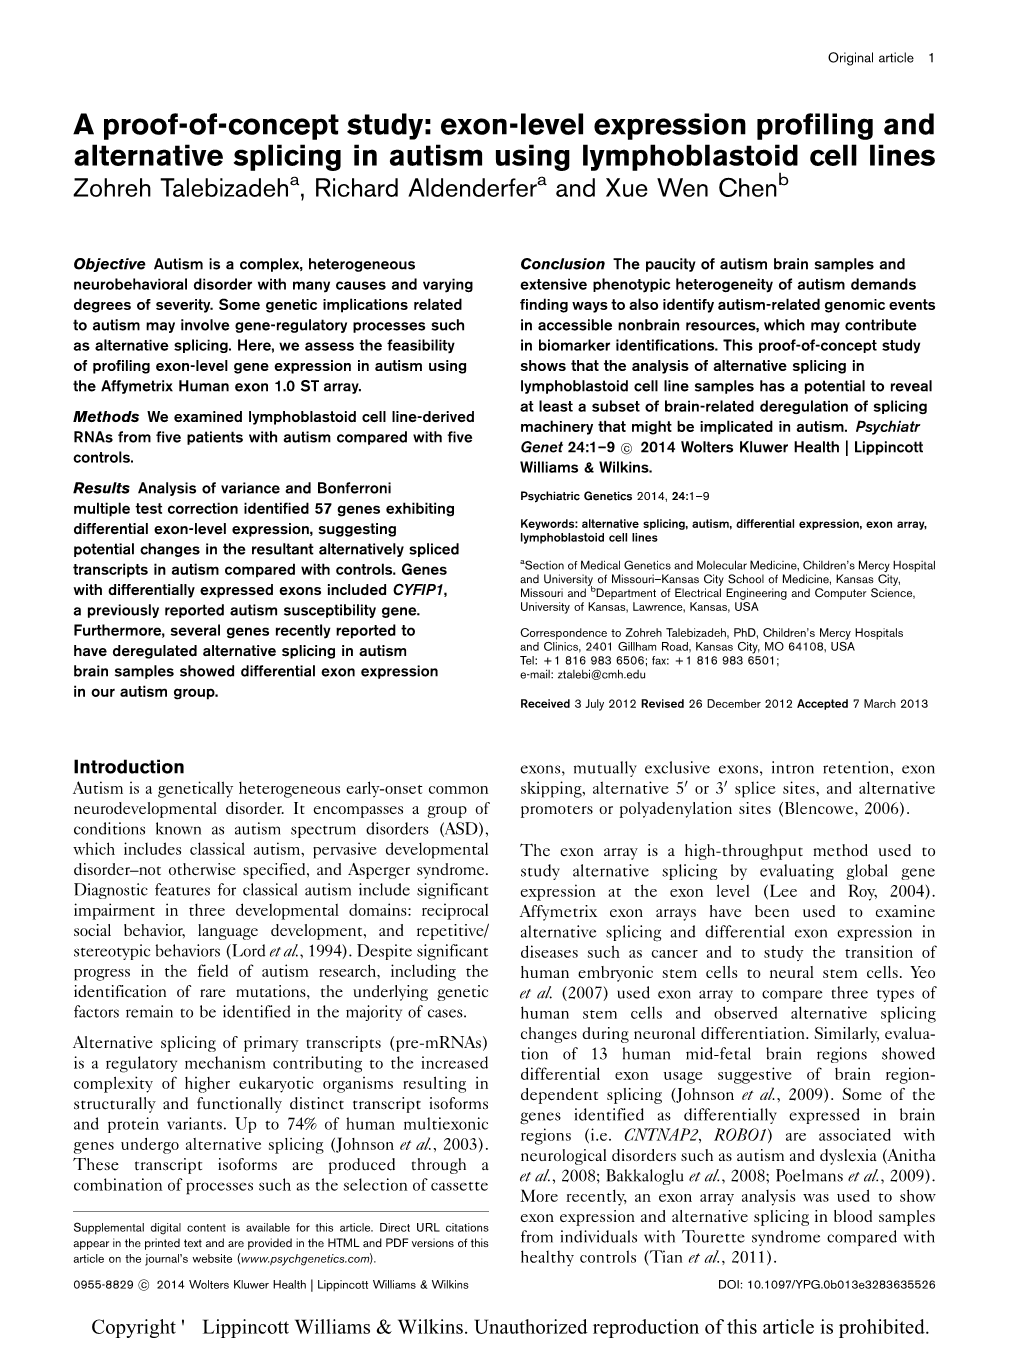 Exon-Level Expression Profiling and Alternative Splicing in Autism Using Lymphoblastoid Cell Lines Zohreh Talebizadeha, Richard Aldenderfera and Xue Wen Chenb